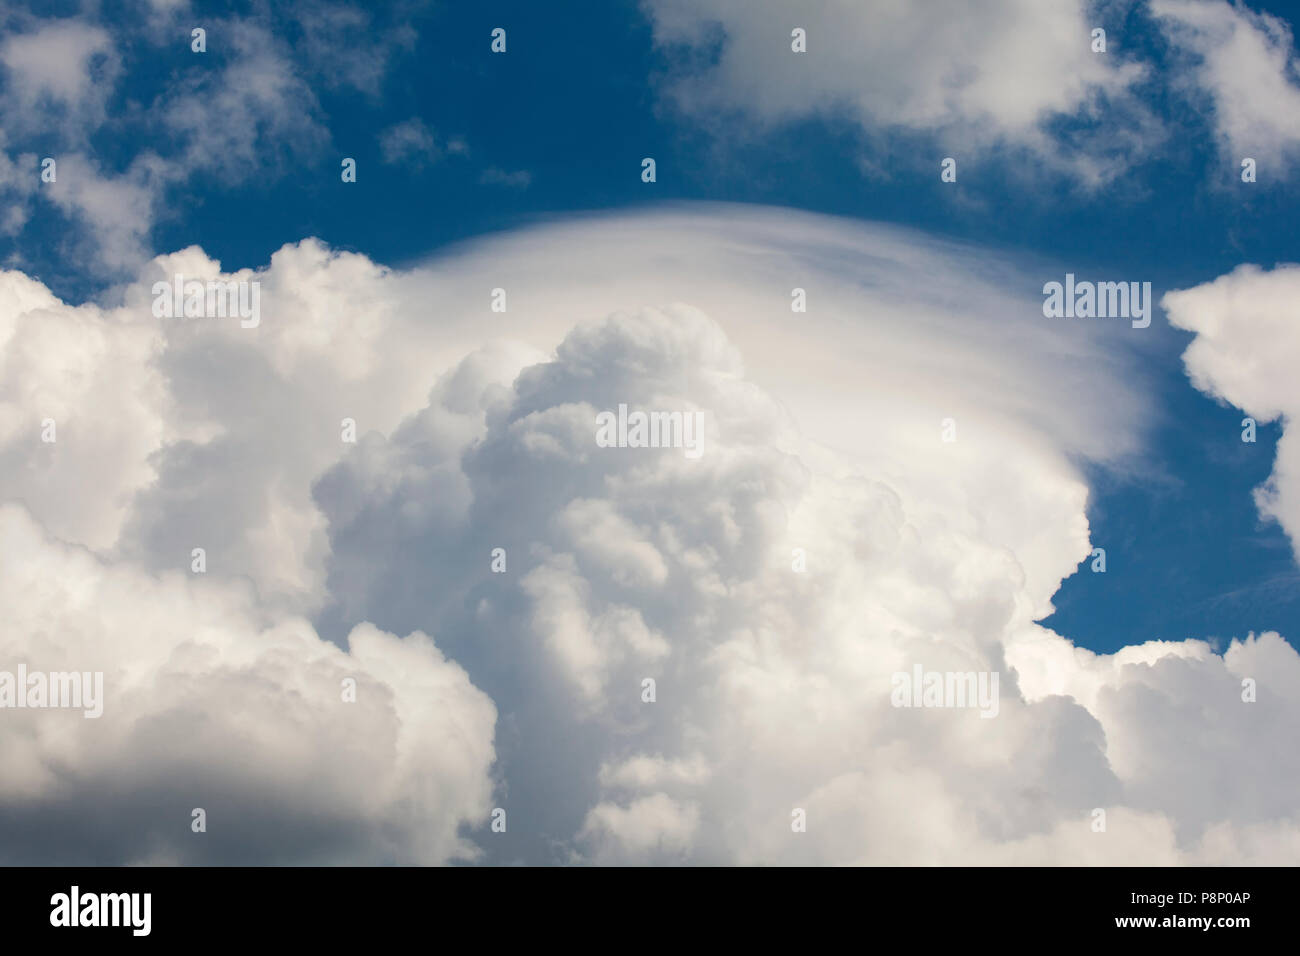 Pileus, also called scarf cloud or cap cloud, above a cumulus cloud Stock Photo